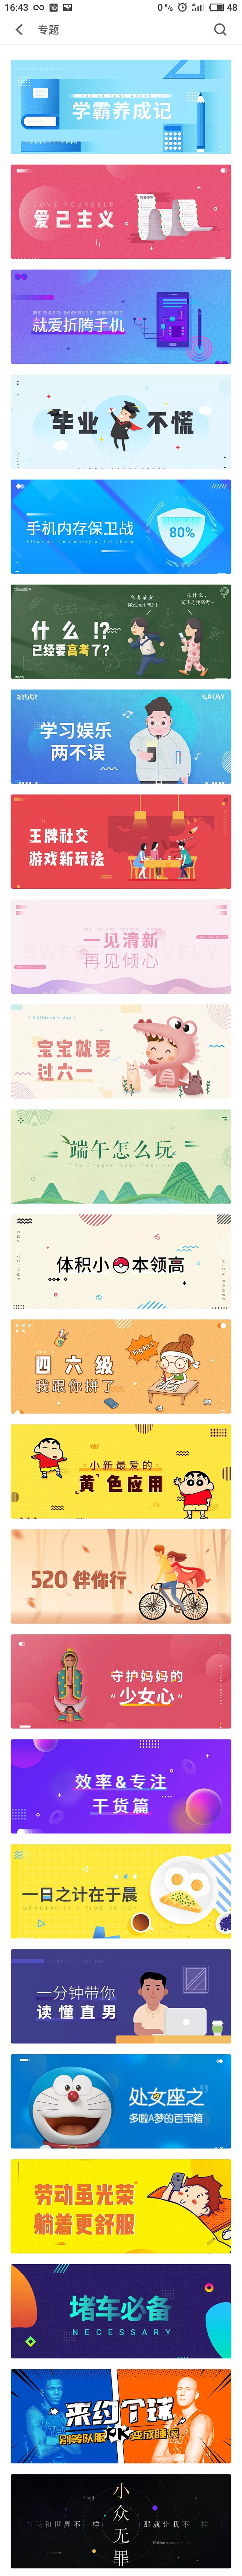 扁平化banner设计 (3)